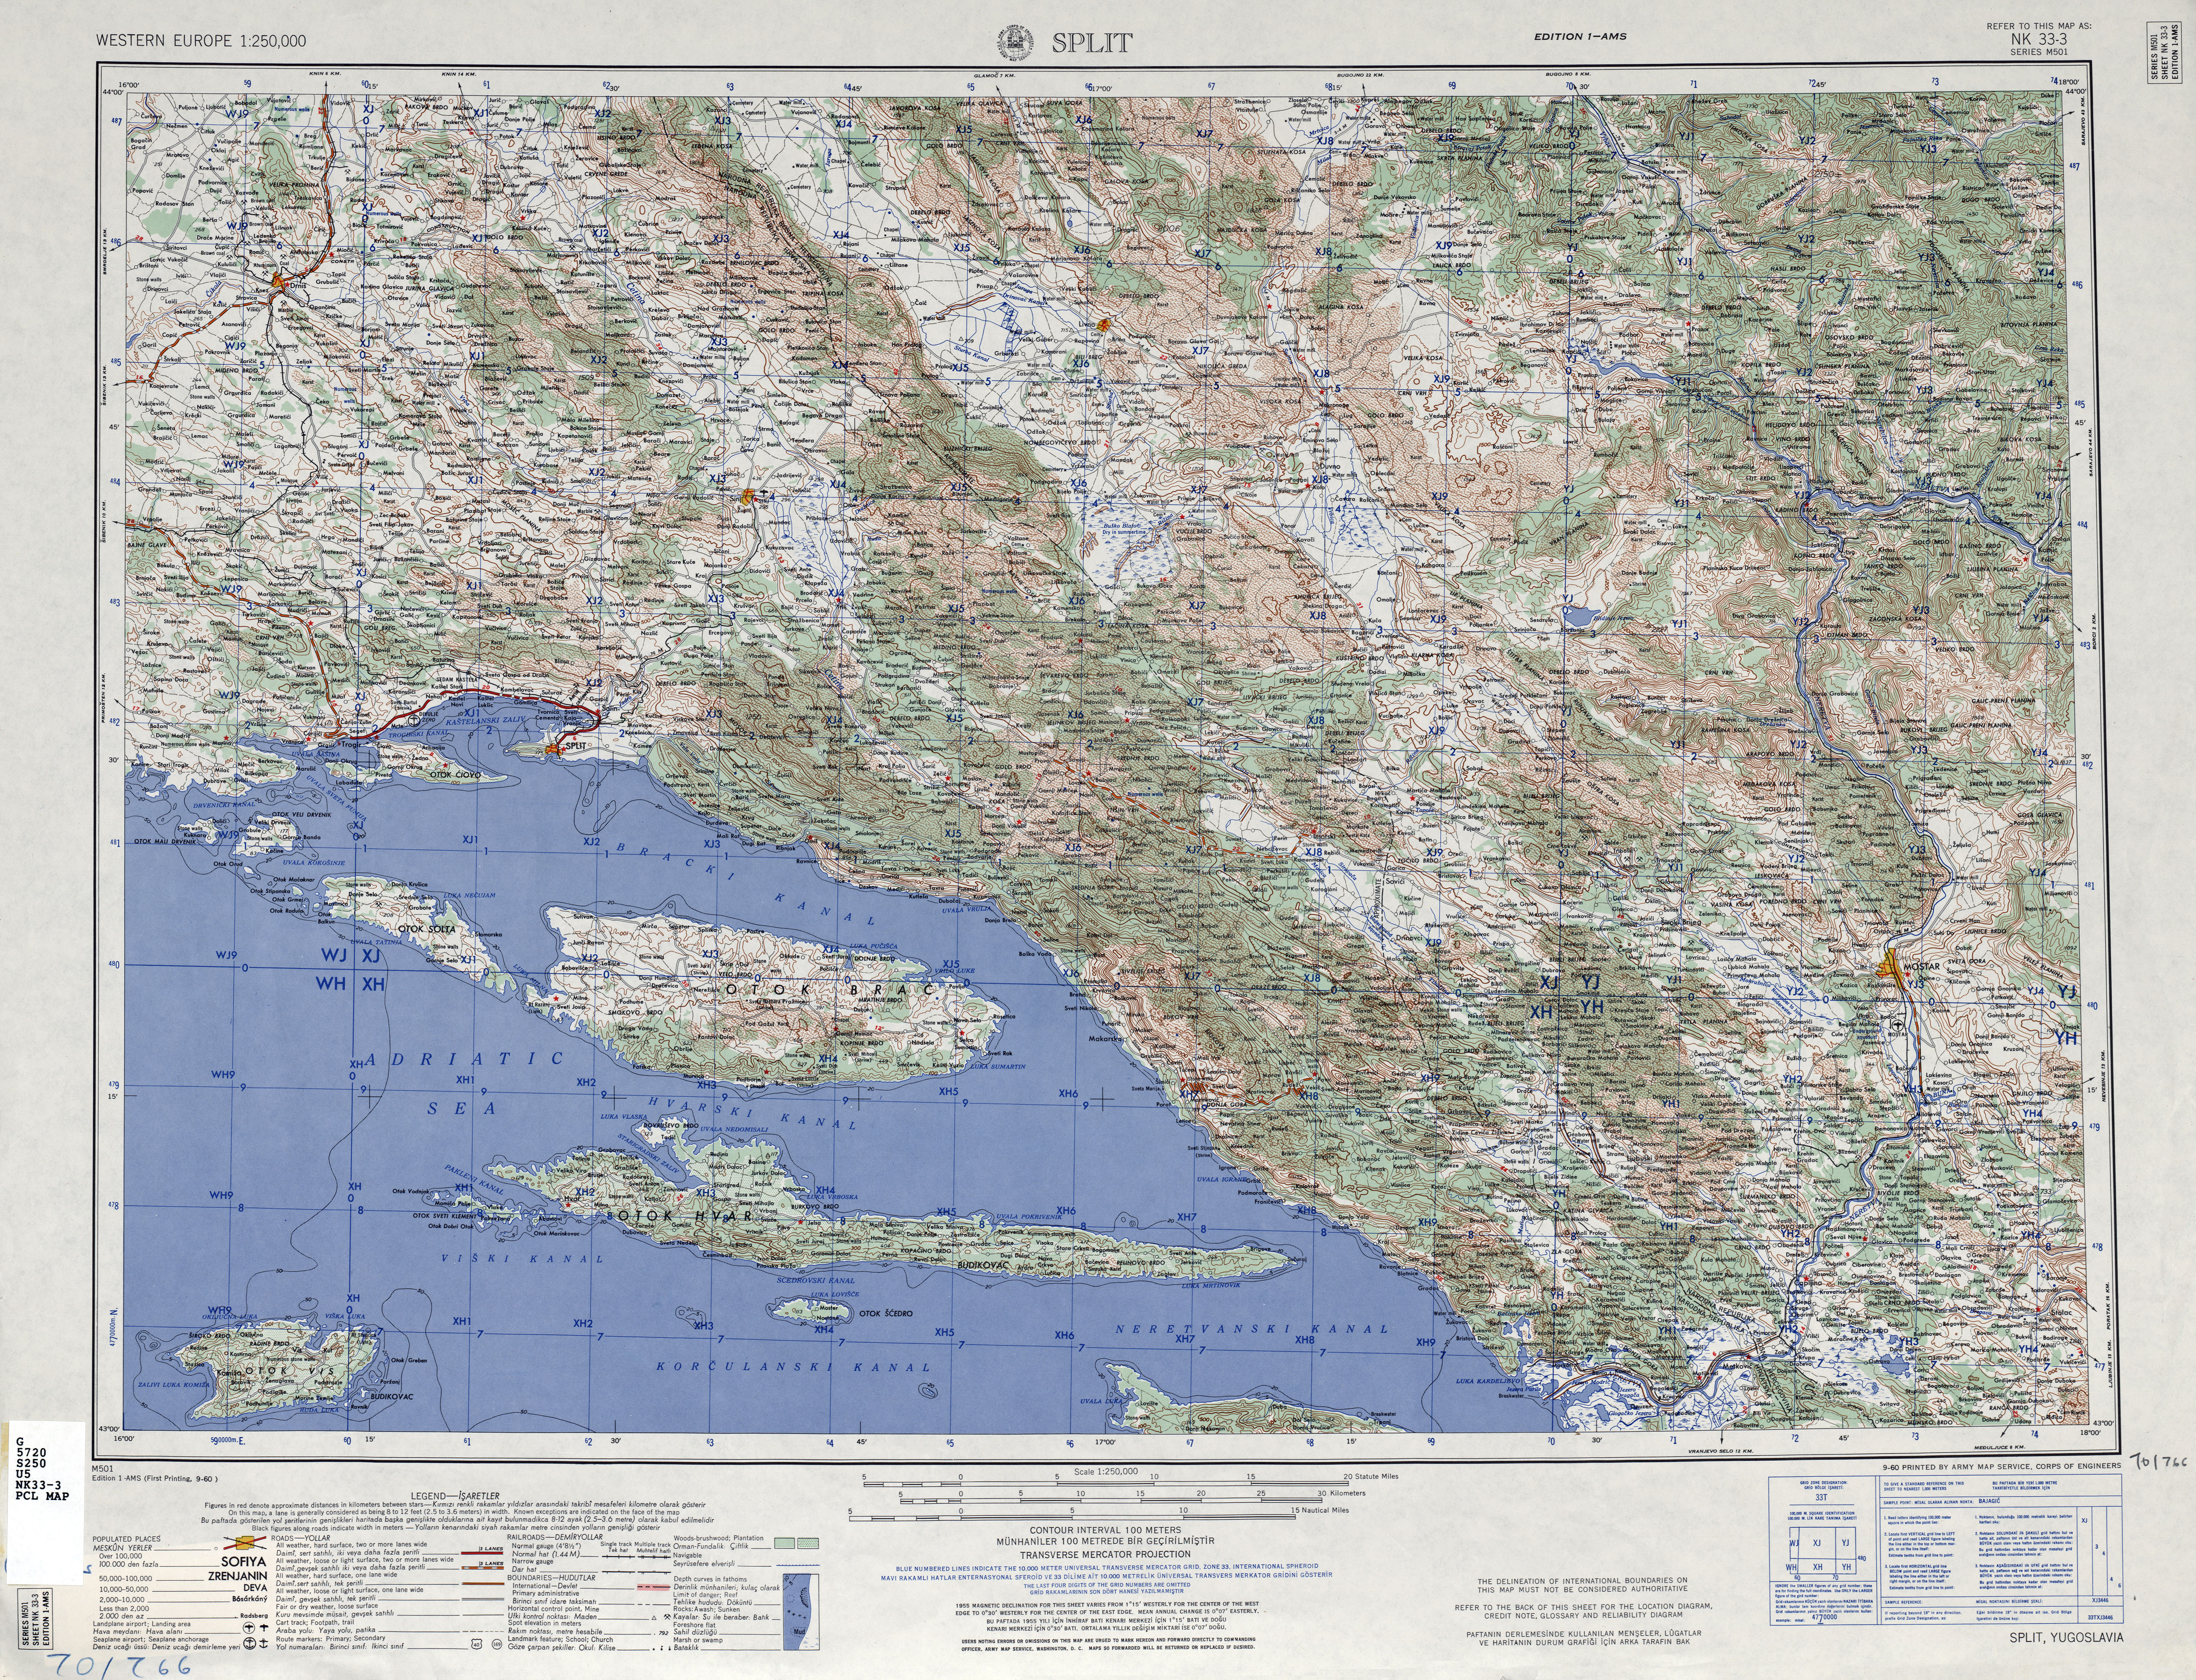 topografska karta splita Western Europe AMS Topographic Maps   Perry Castañeda Map  topografska karta splita